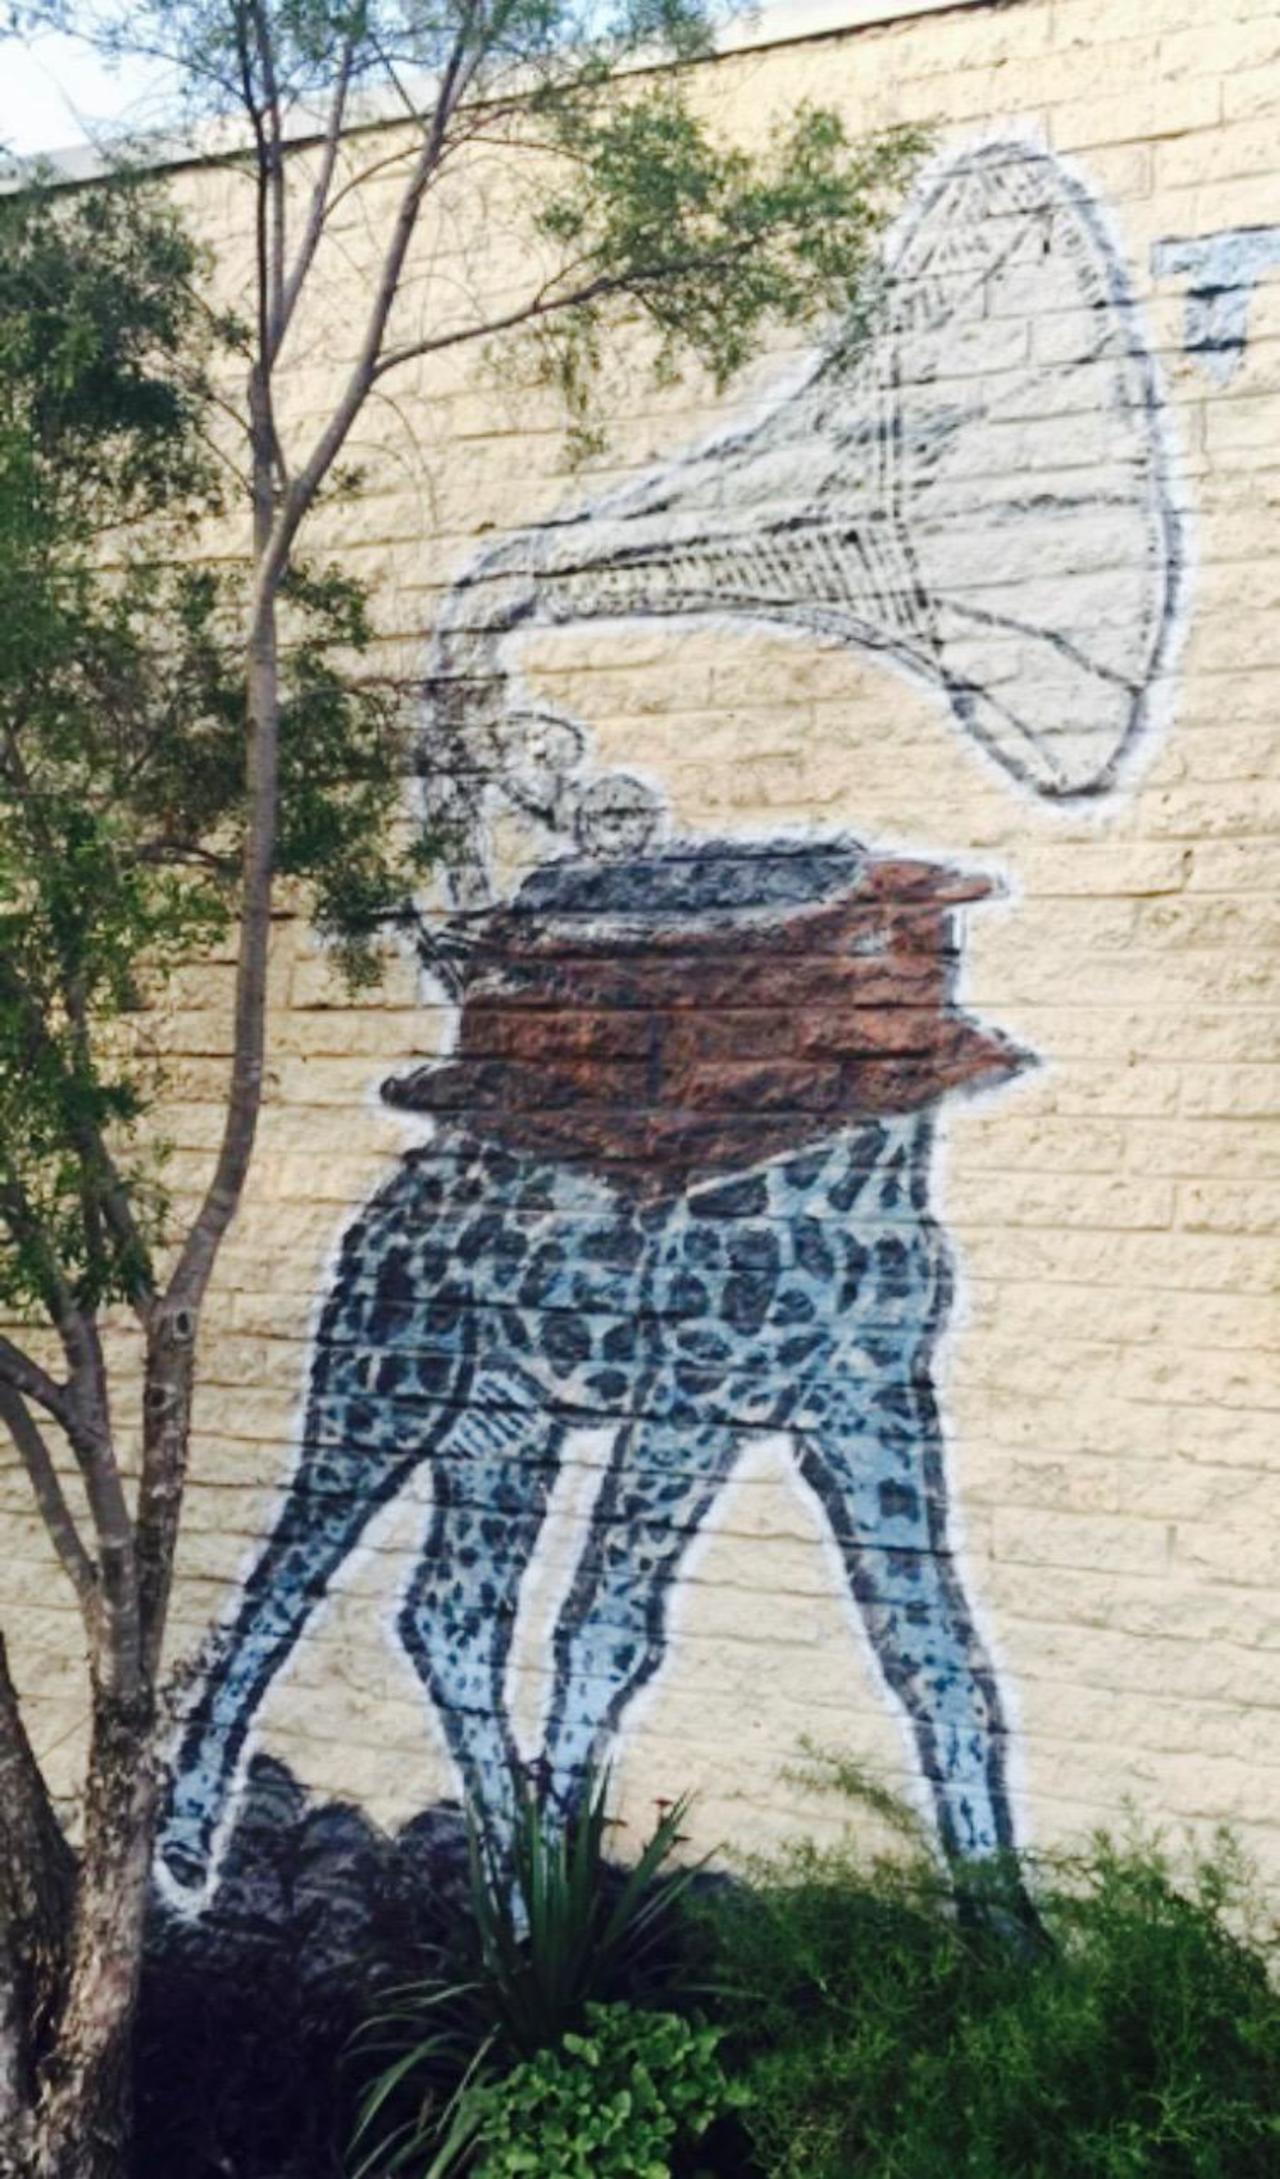 I just so happen to love #music and #giraffes! #streetart #graffiti #atx #soco http://t.co/LQOXb2dJoX